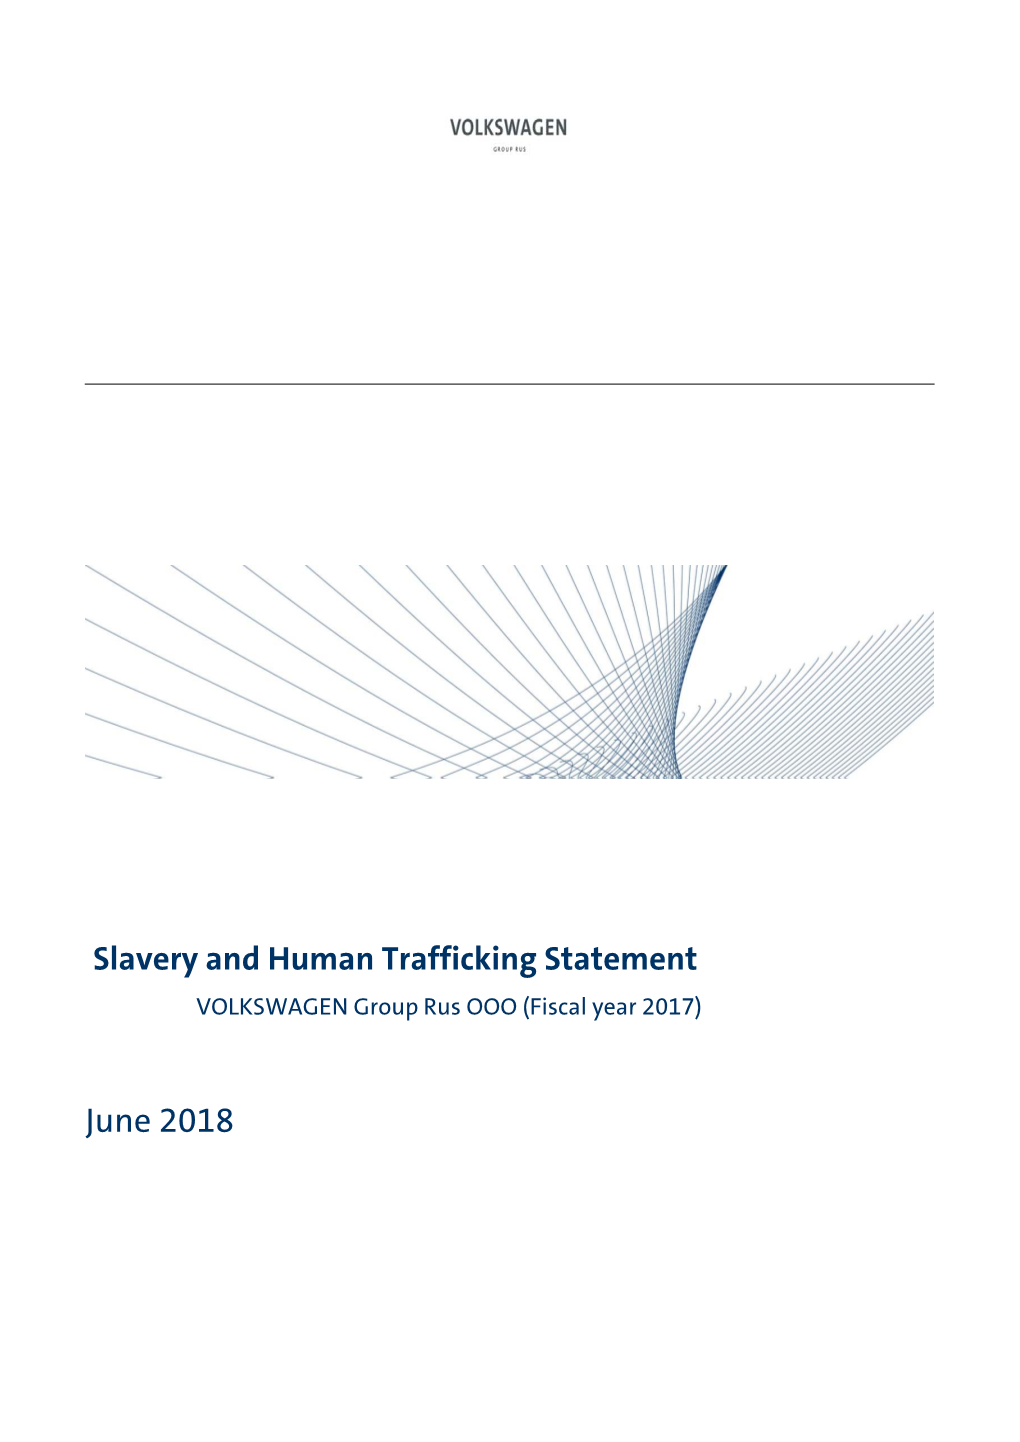 Slavery and Human Trafficking Statement June 2018